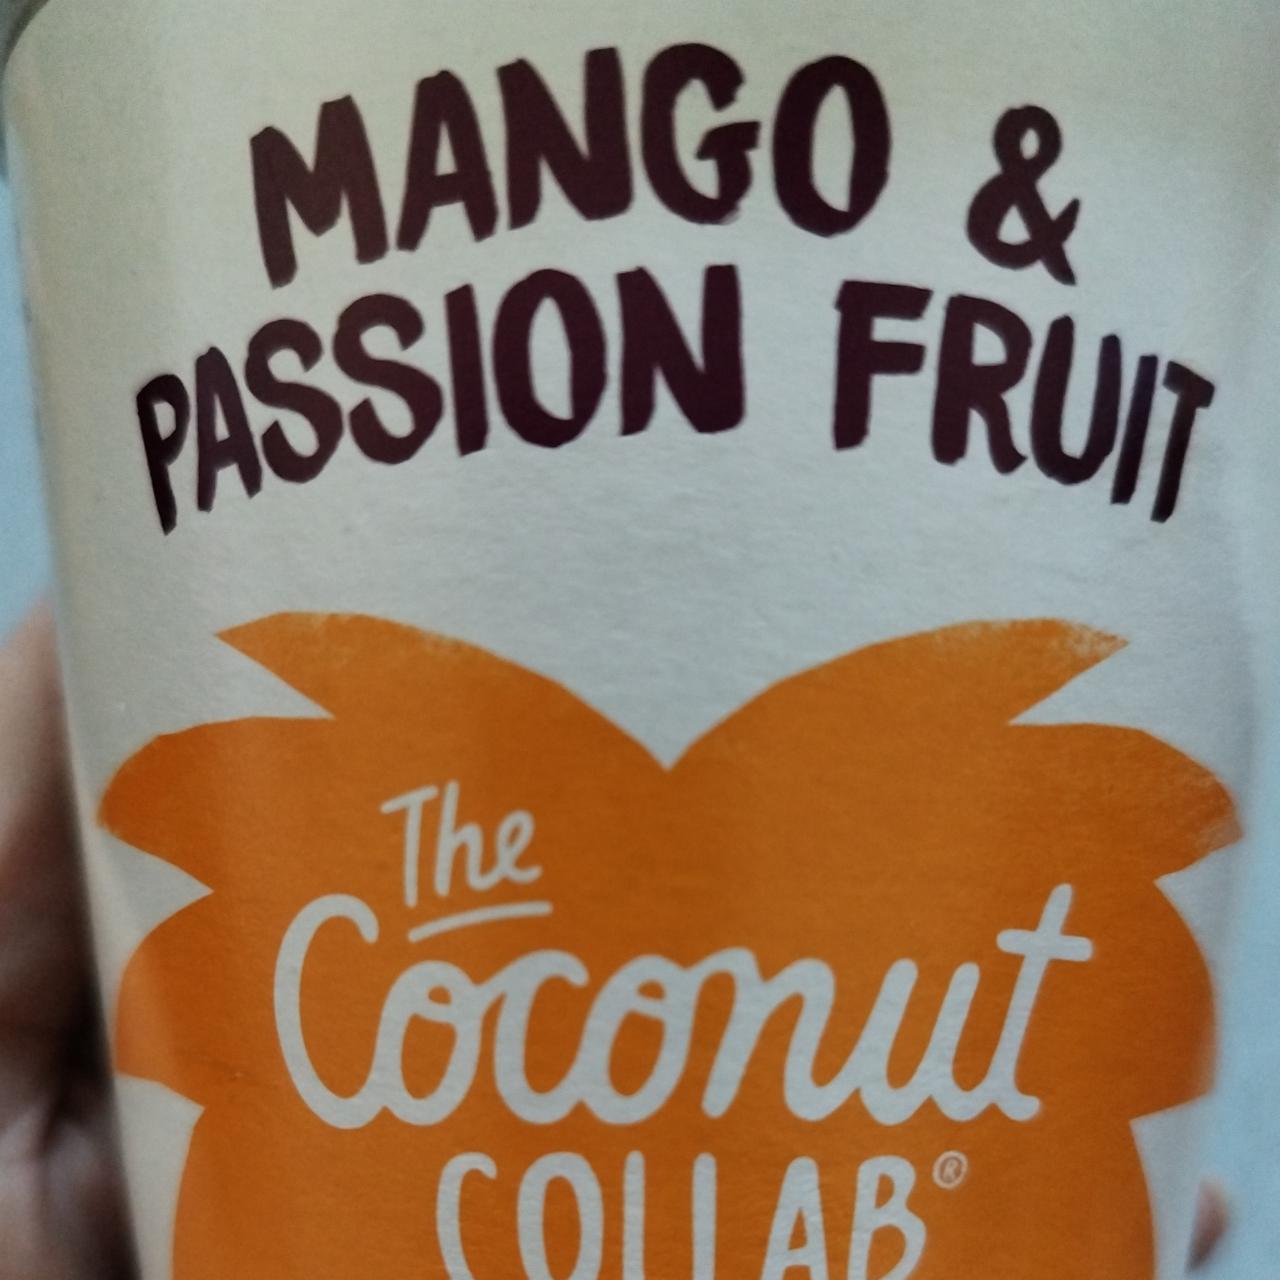 Fotografie - Mango & Passion Fruit The Coconut Collab